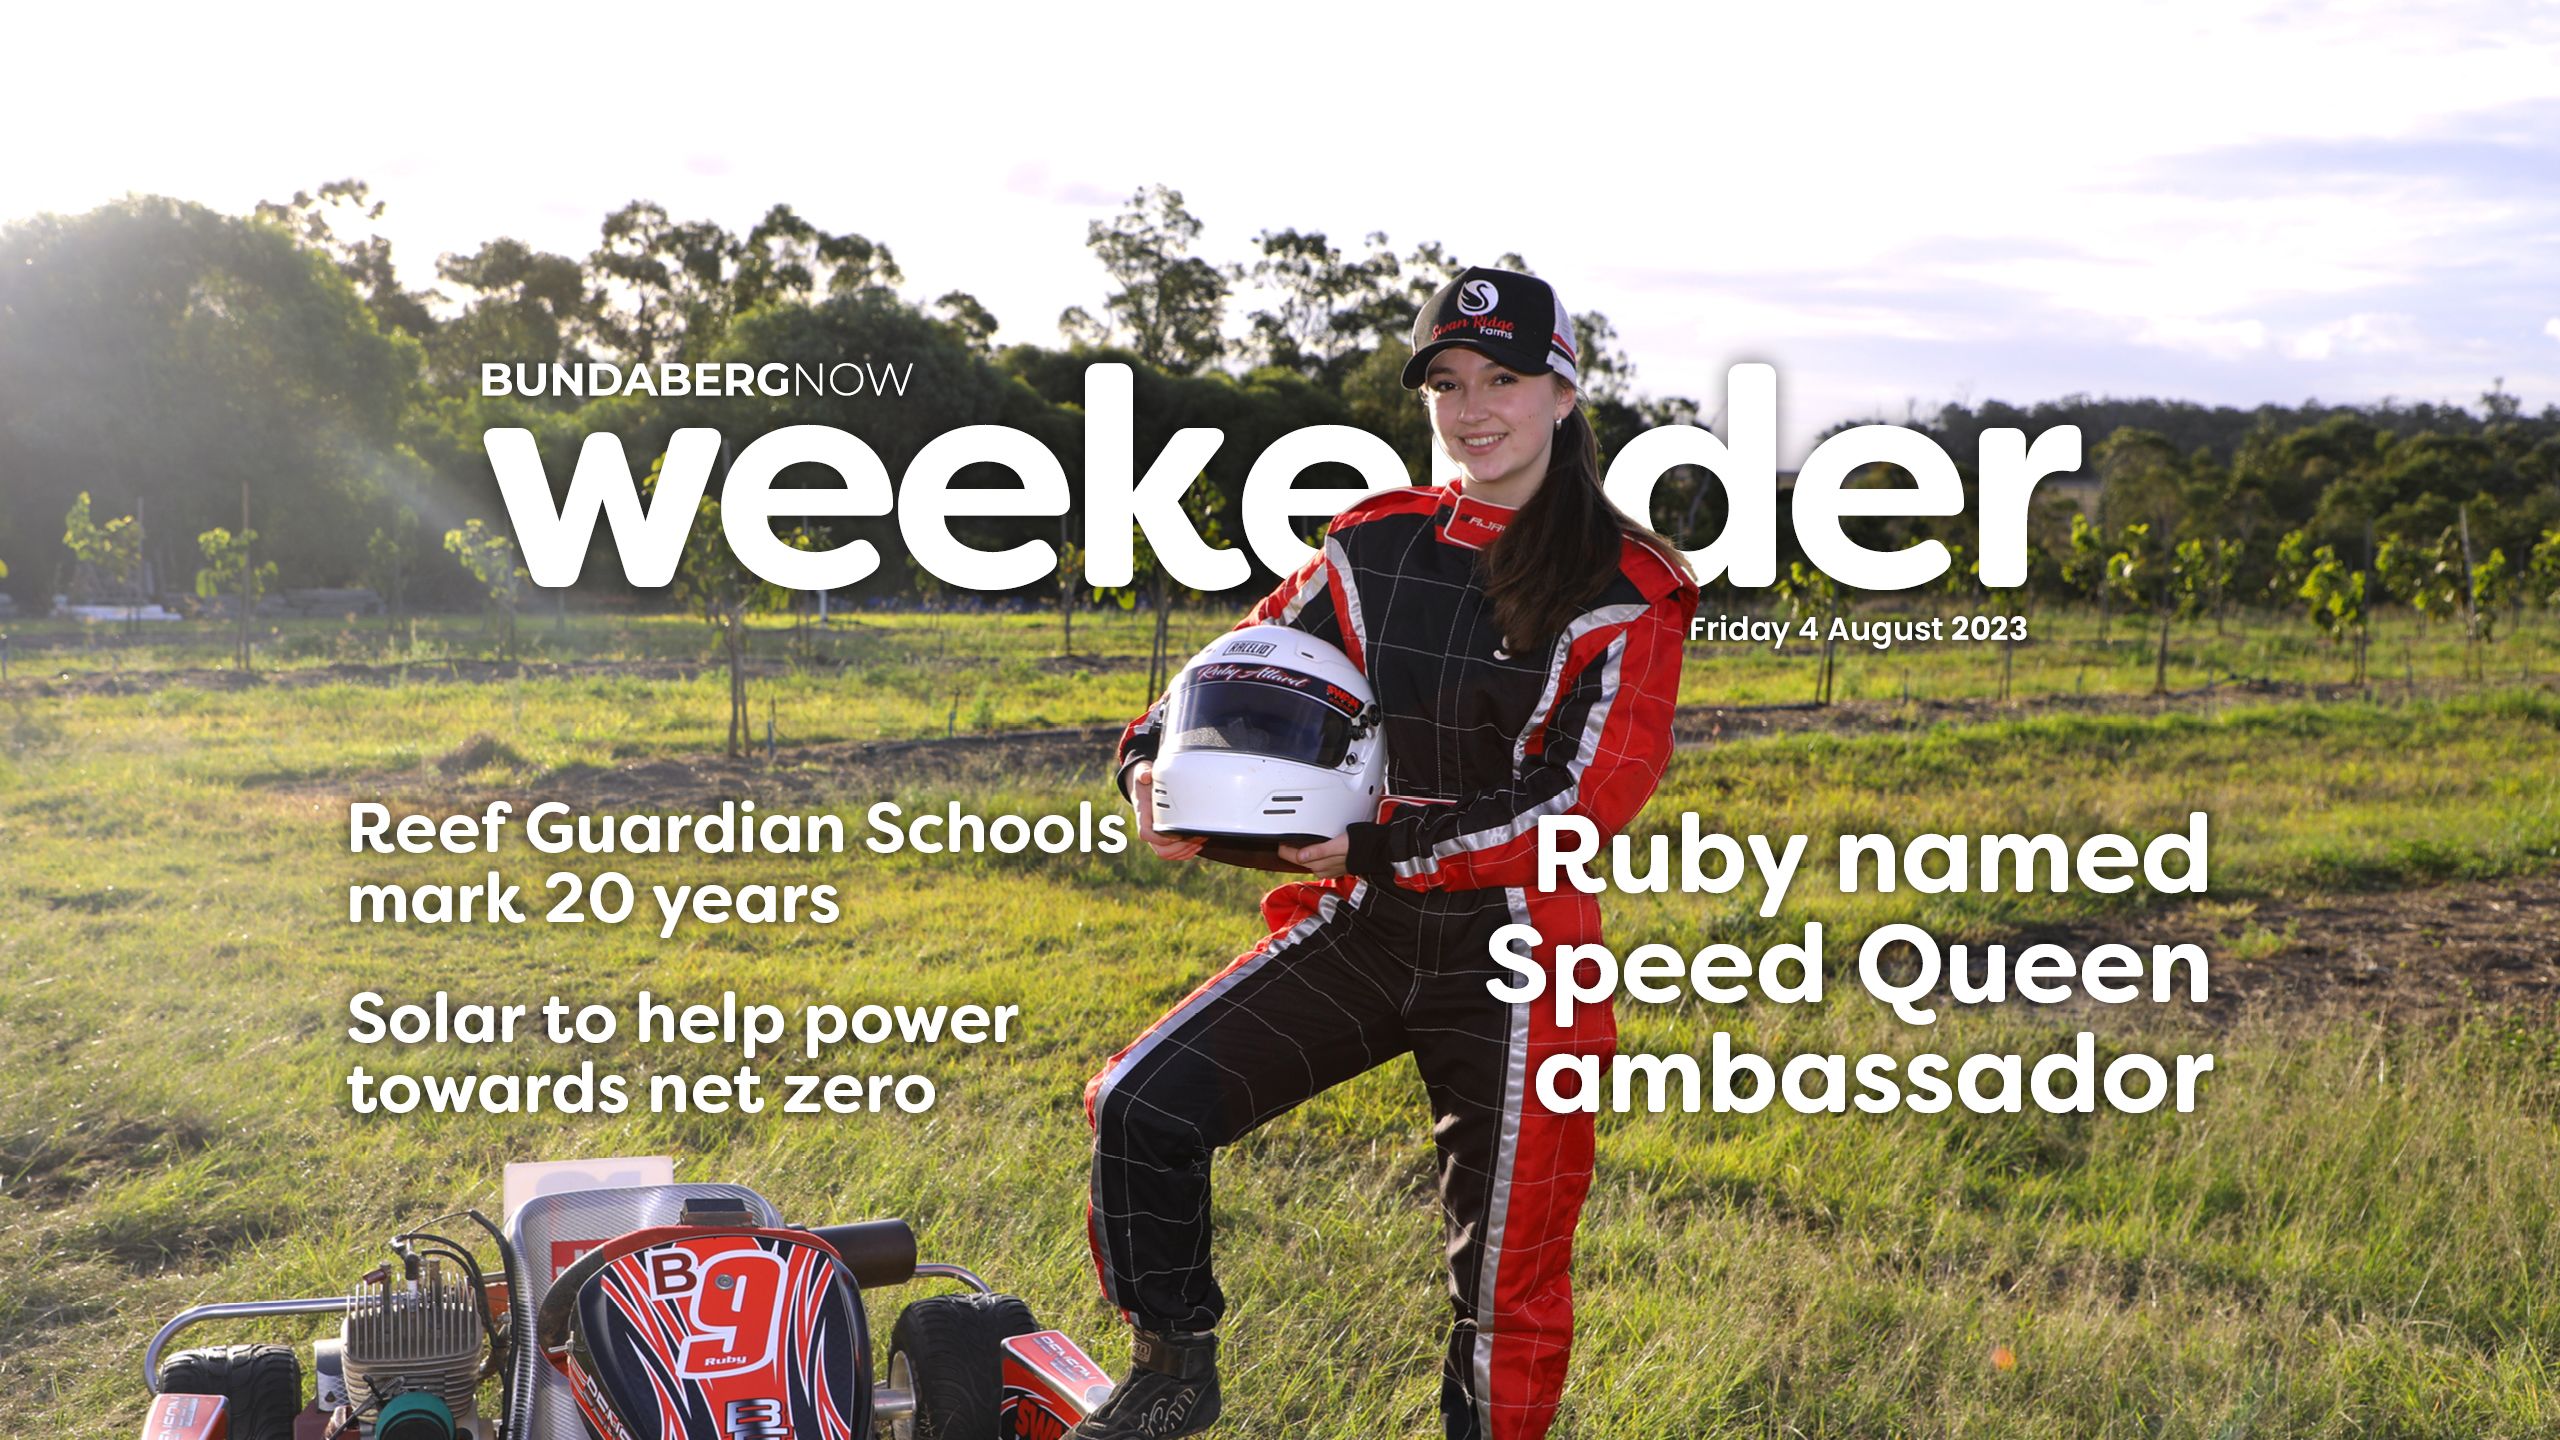 Weekender: Ruby named Speed Queen ambassador